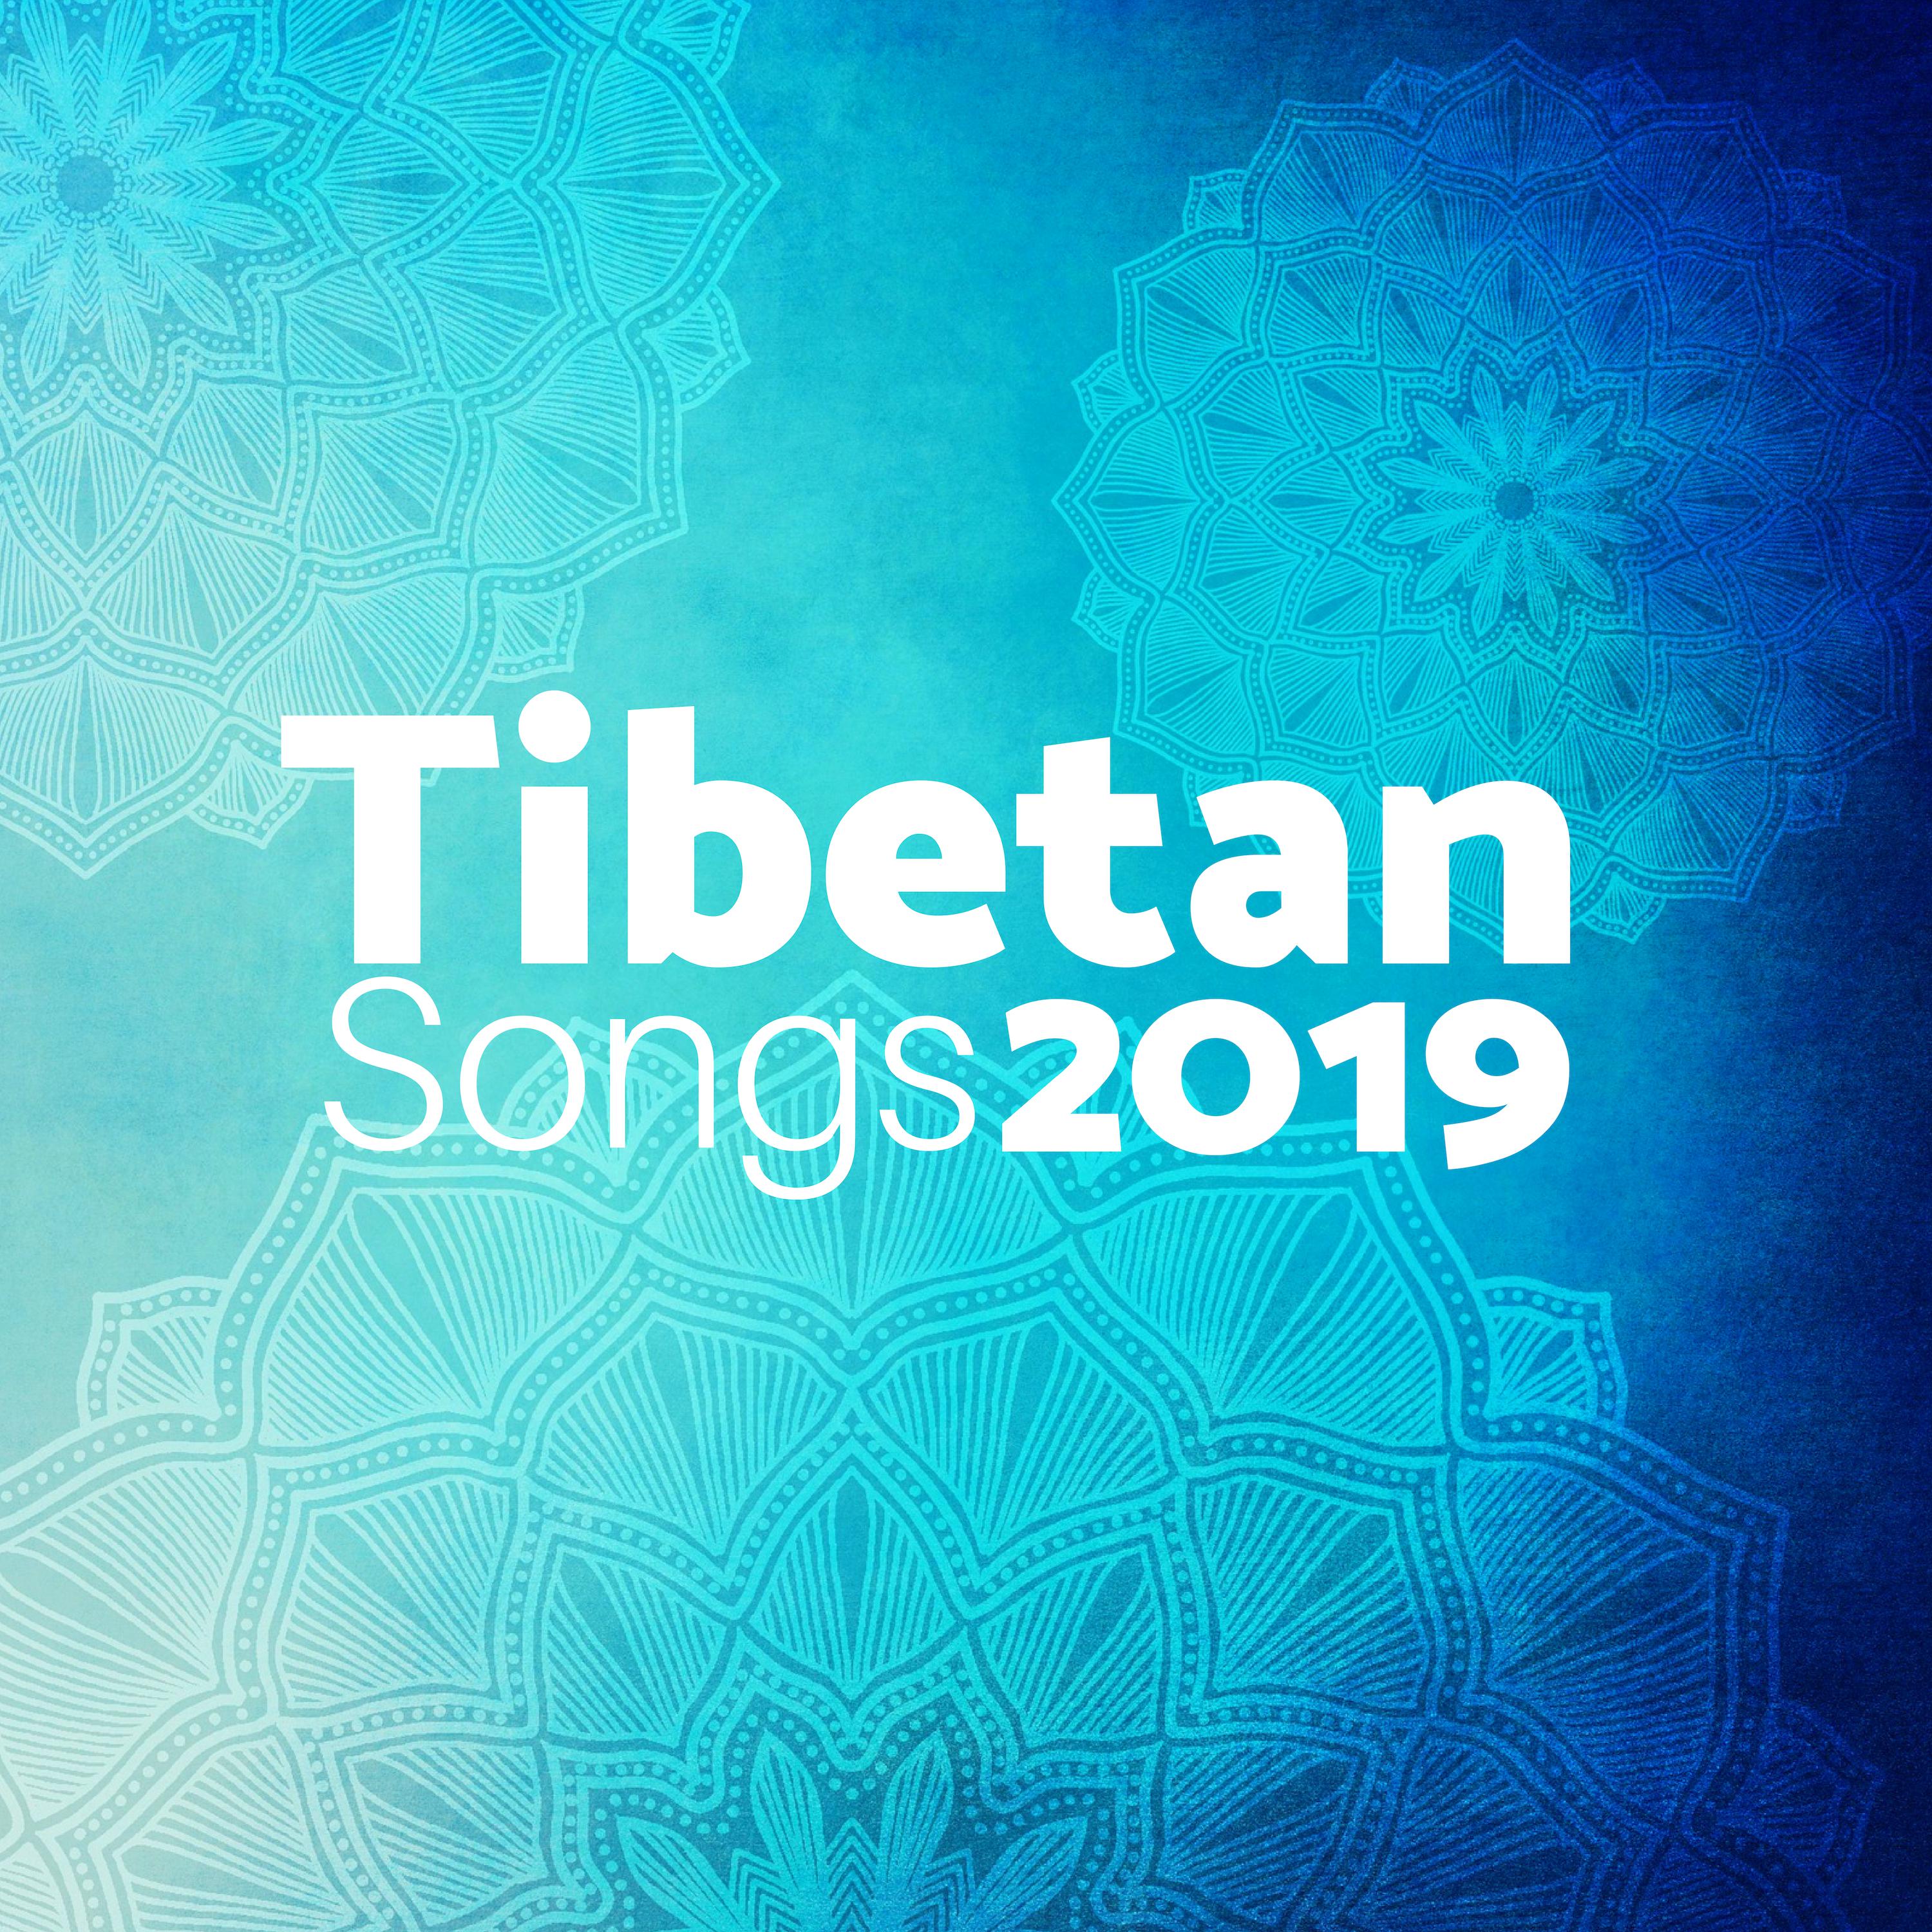 Tibetan Songs 2019